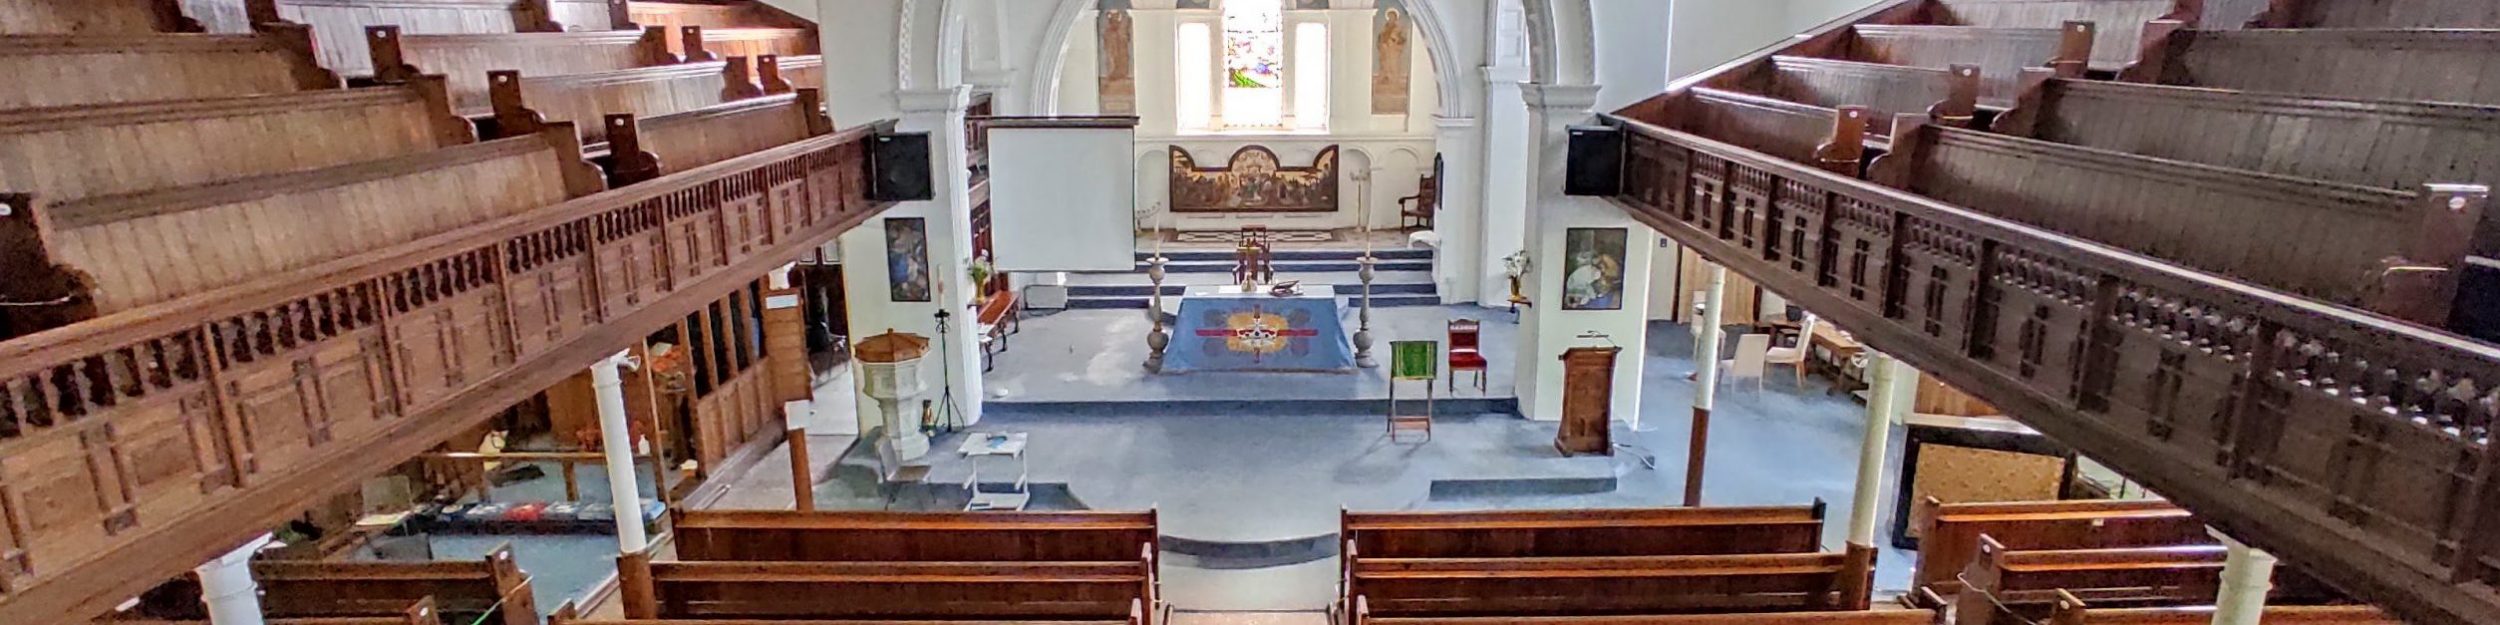 The Church of England in Marsden and Slaithwaite